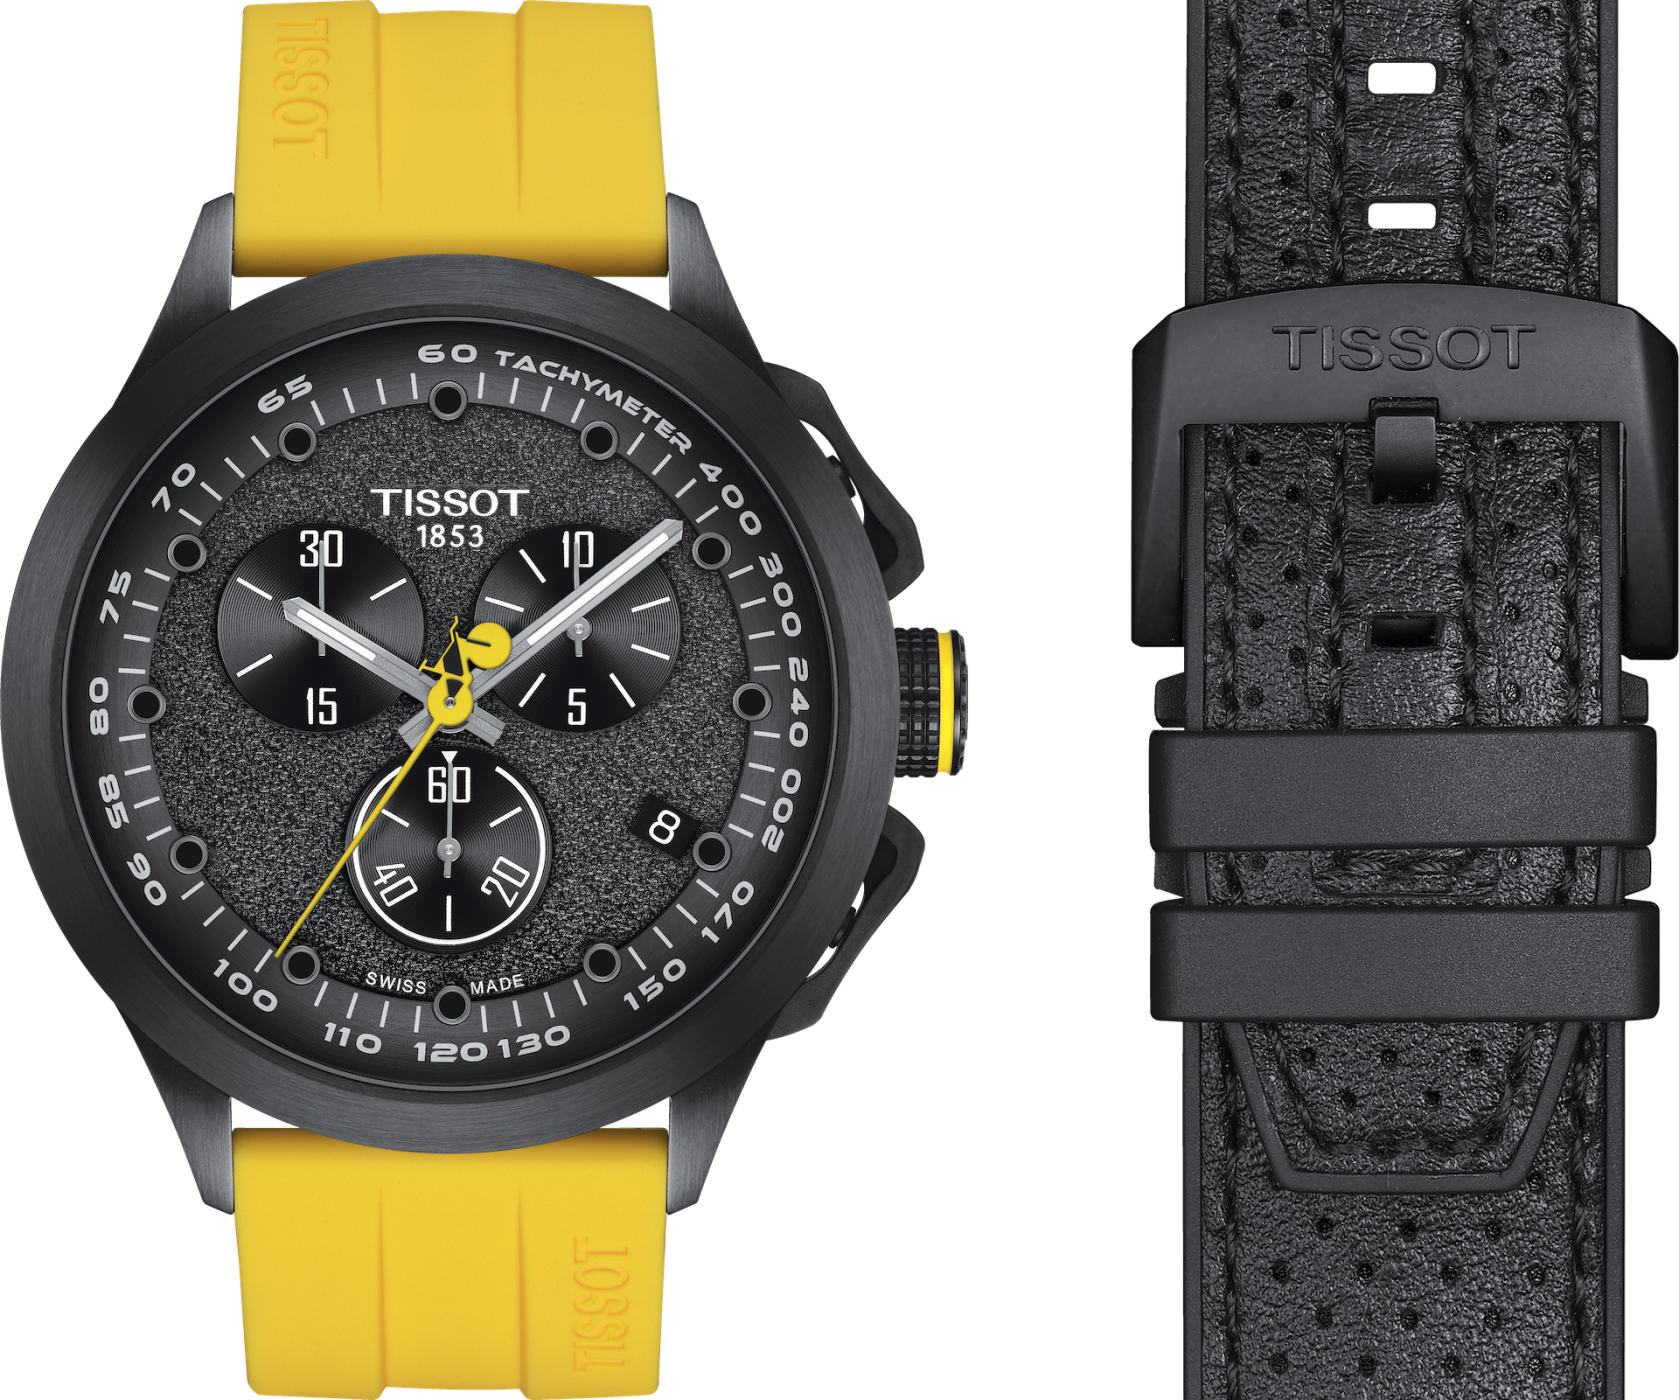 Die neue Tissot-Uhr im Tour de France Design